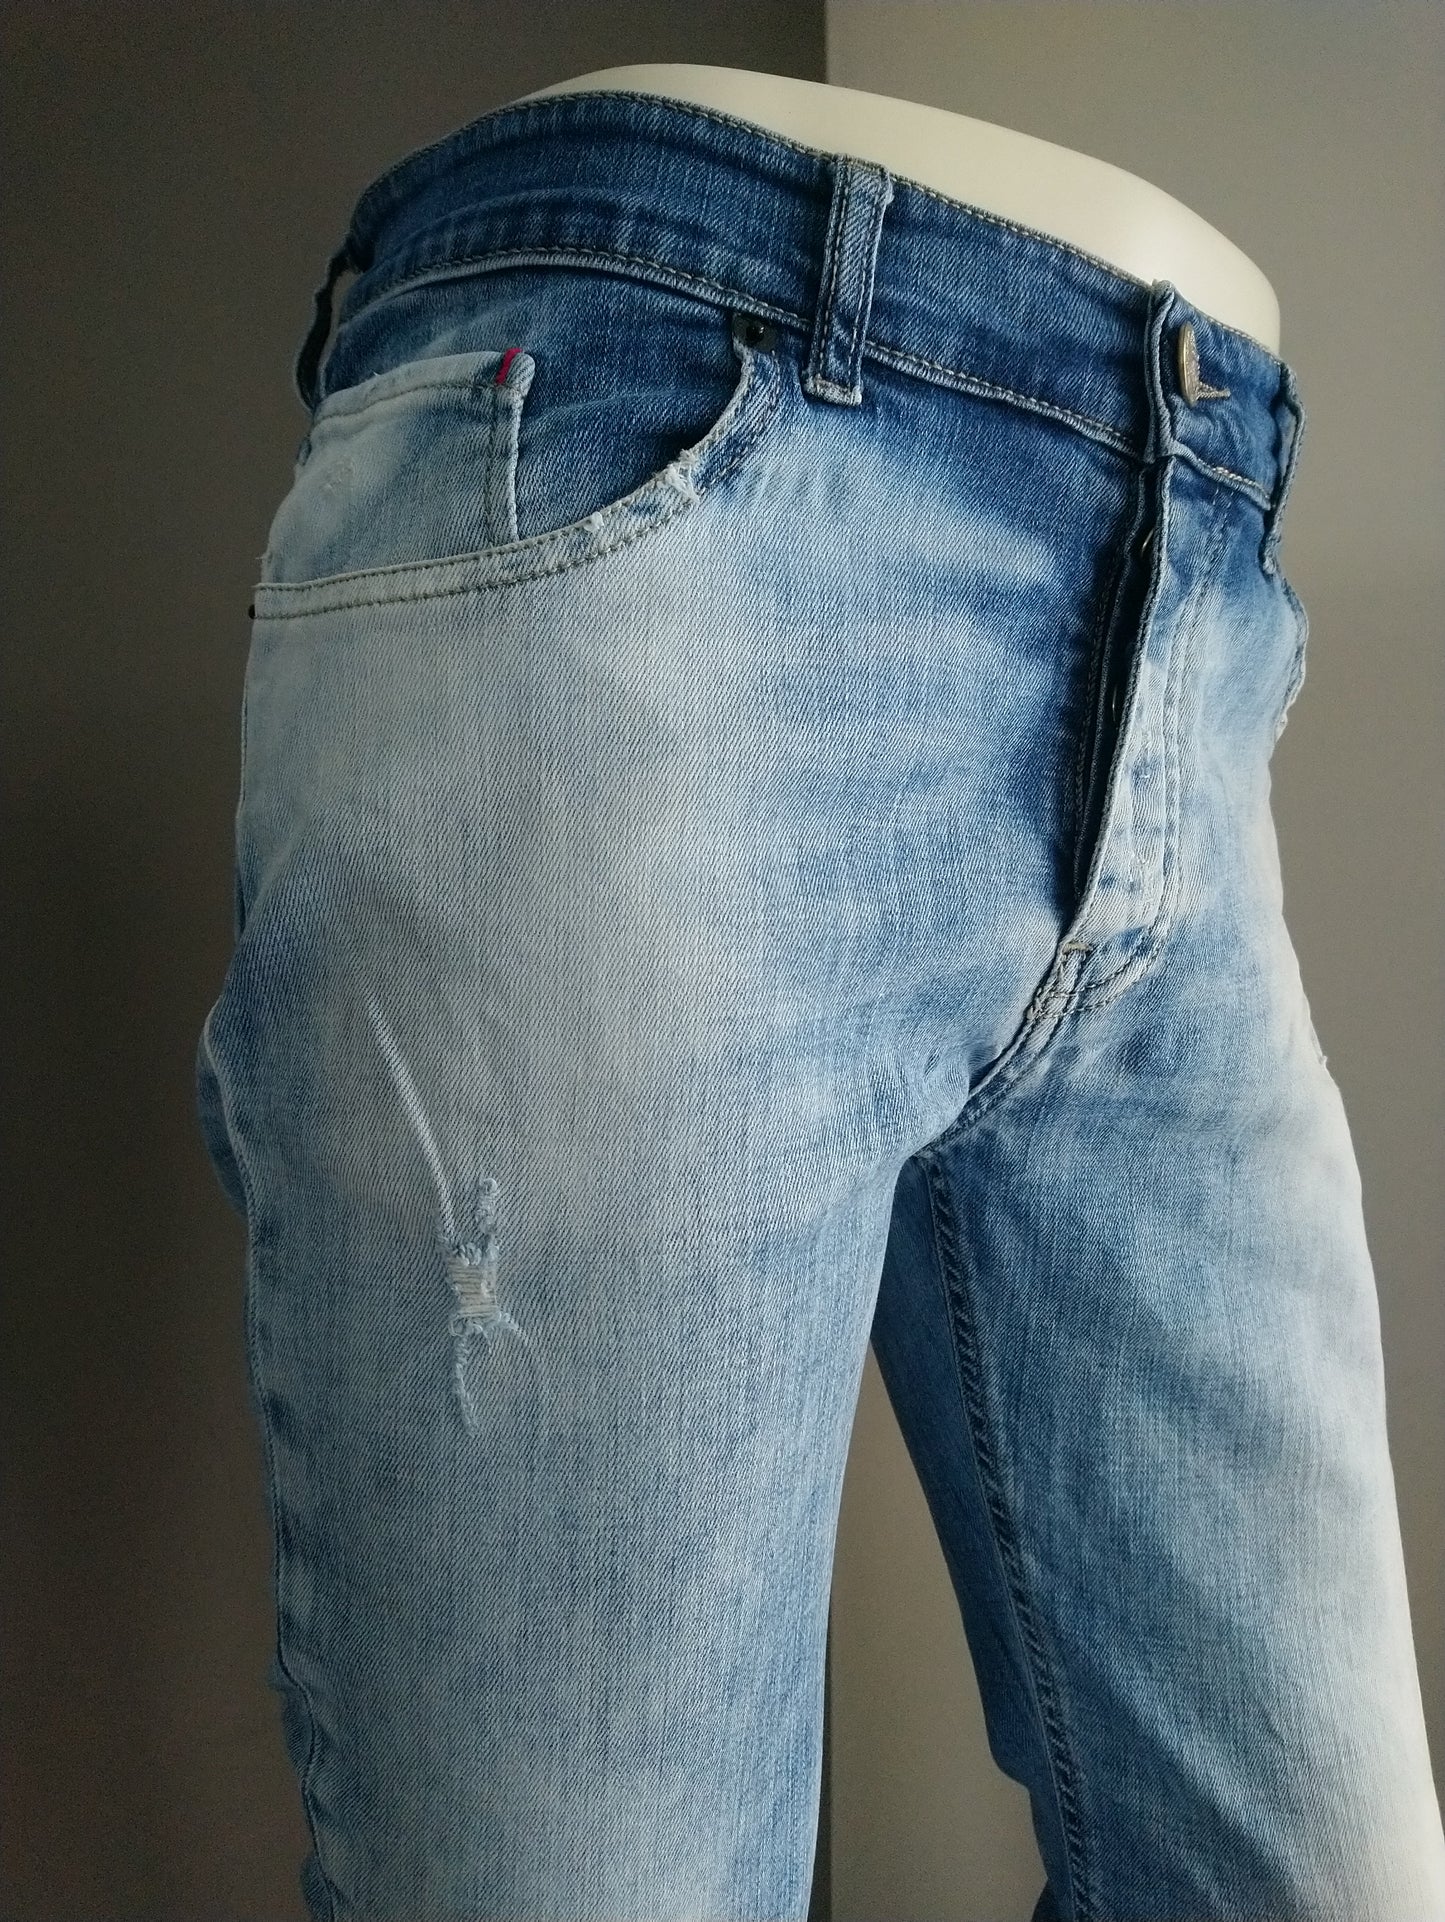 PMDS (Premium Mood Denim Superior) Jeans. Light blue colored. Size W32-L30. Stretch.